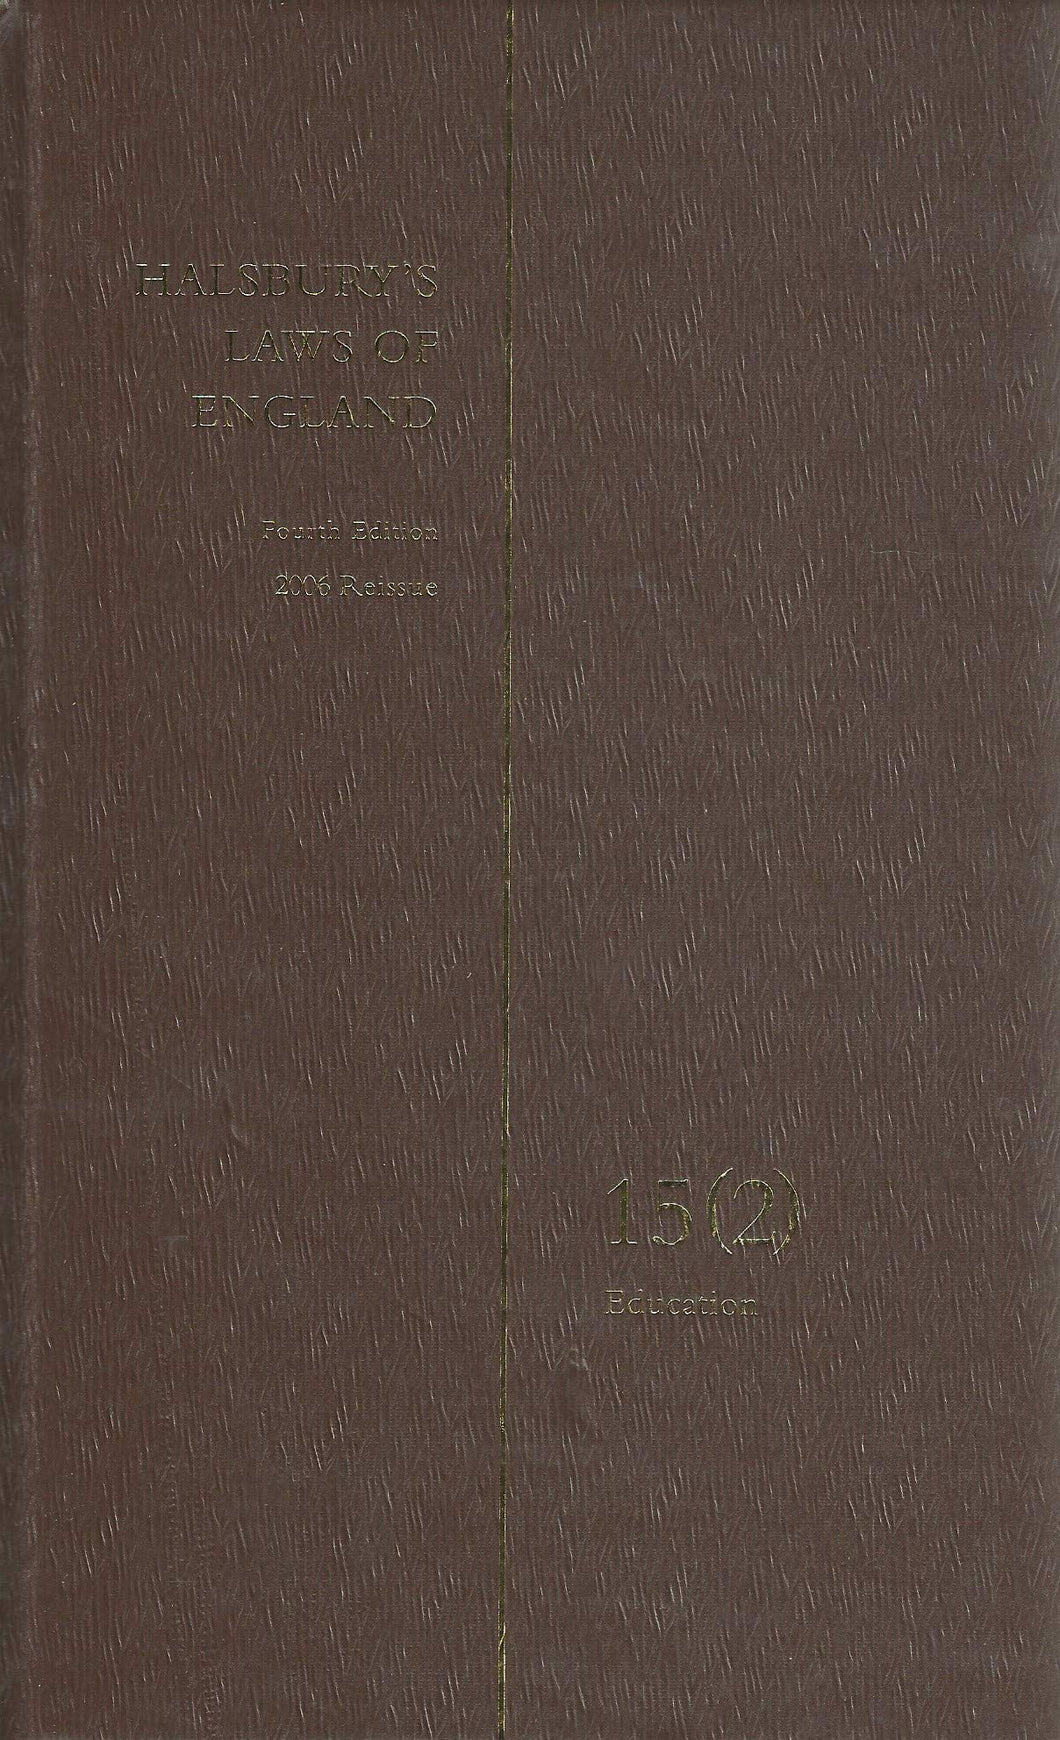 Halsbury's Laws of England Vol 15 (2)